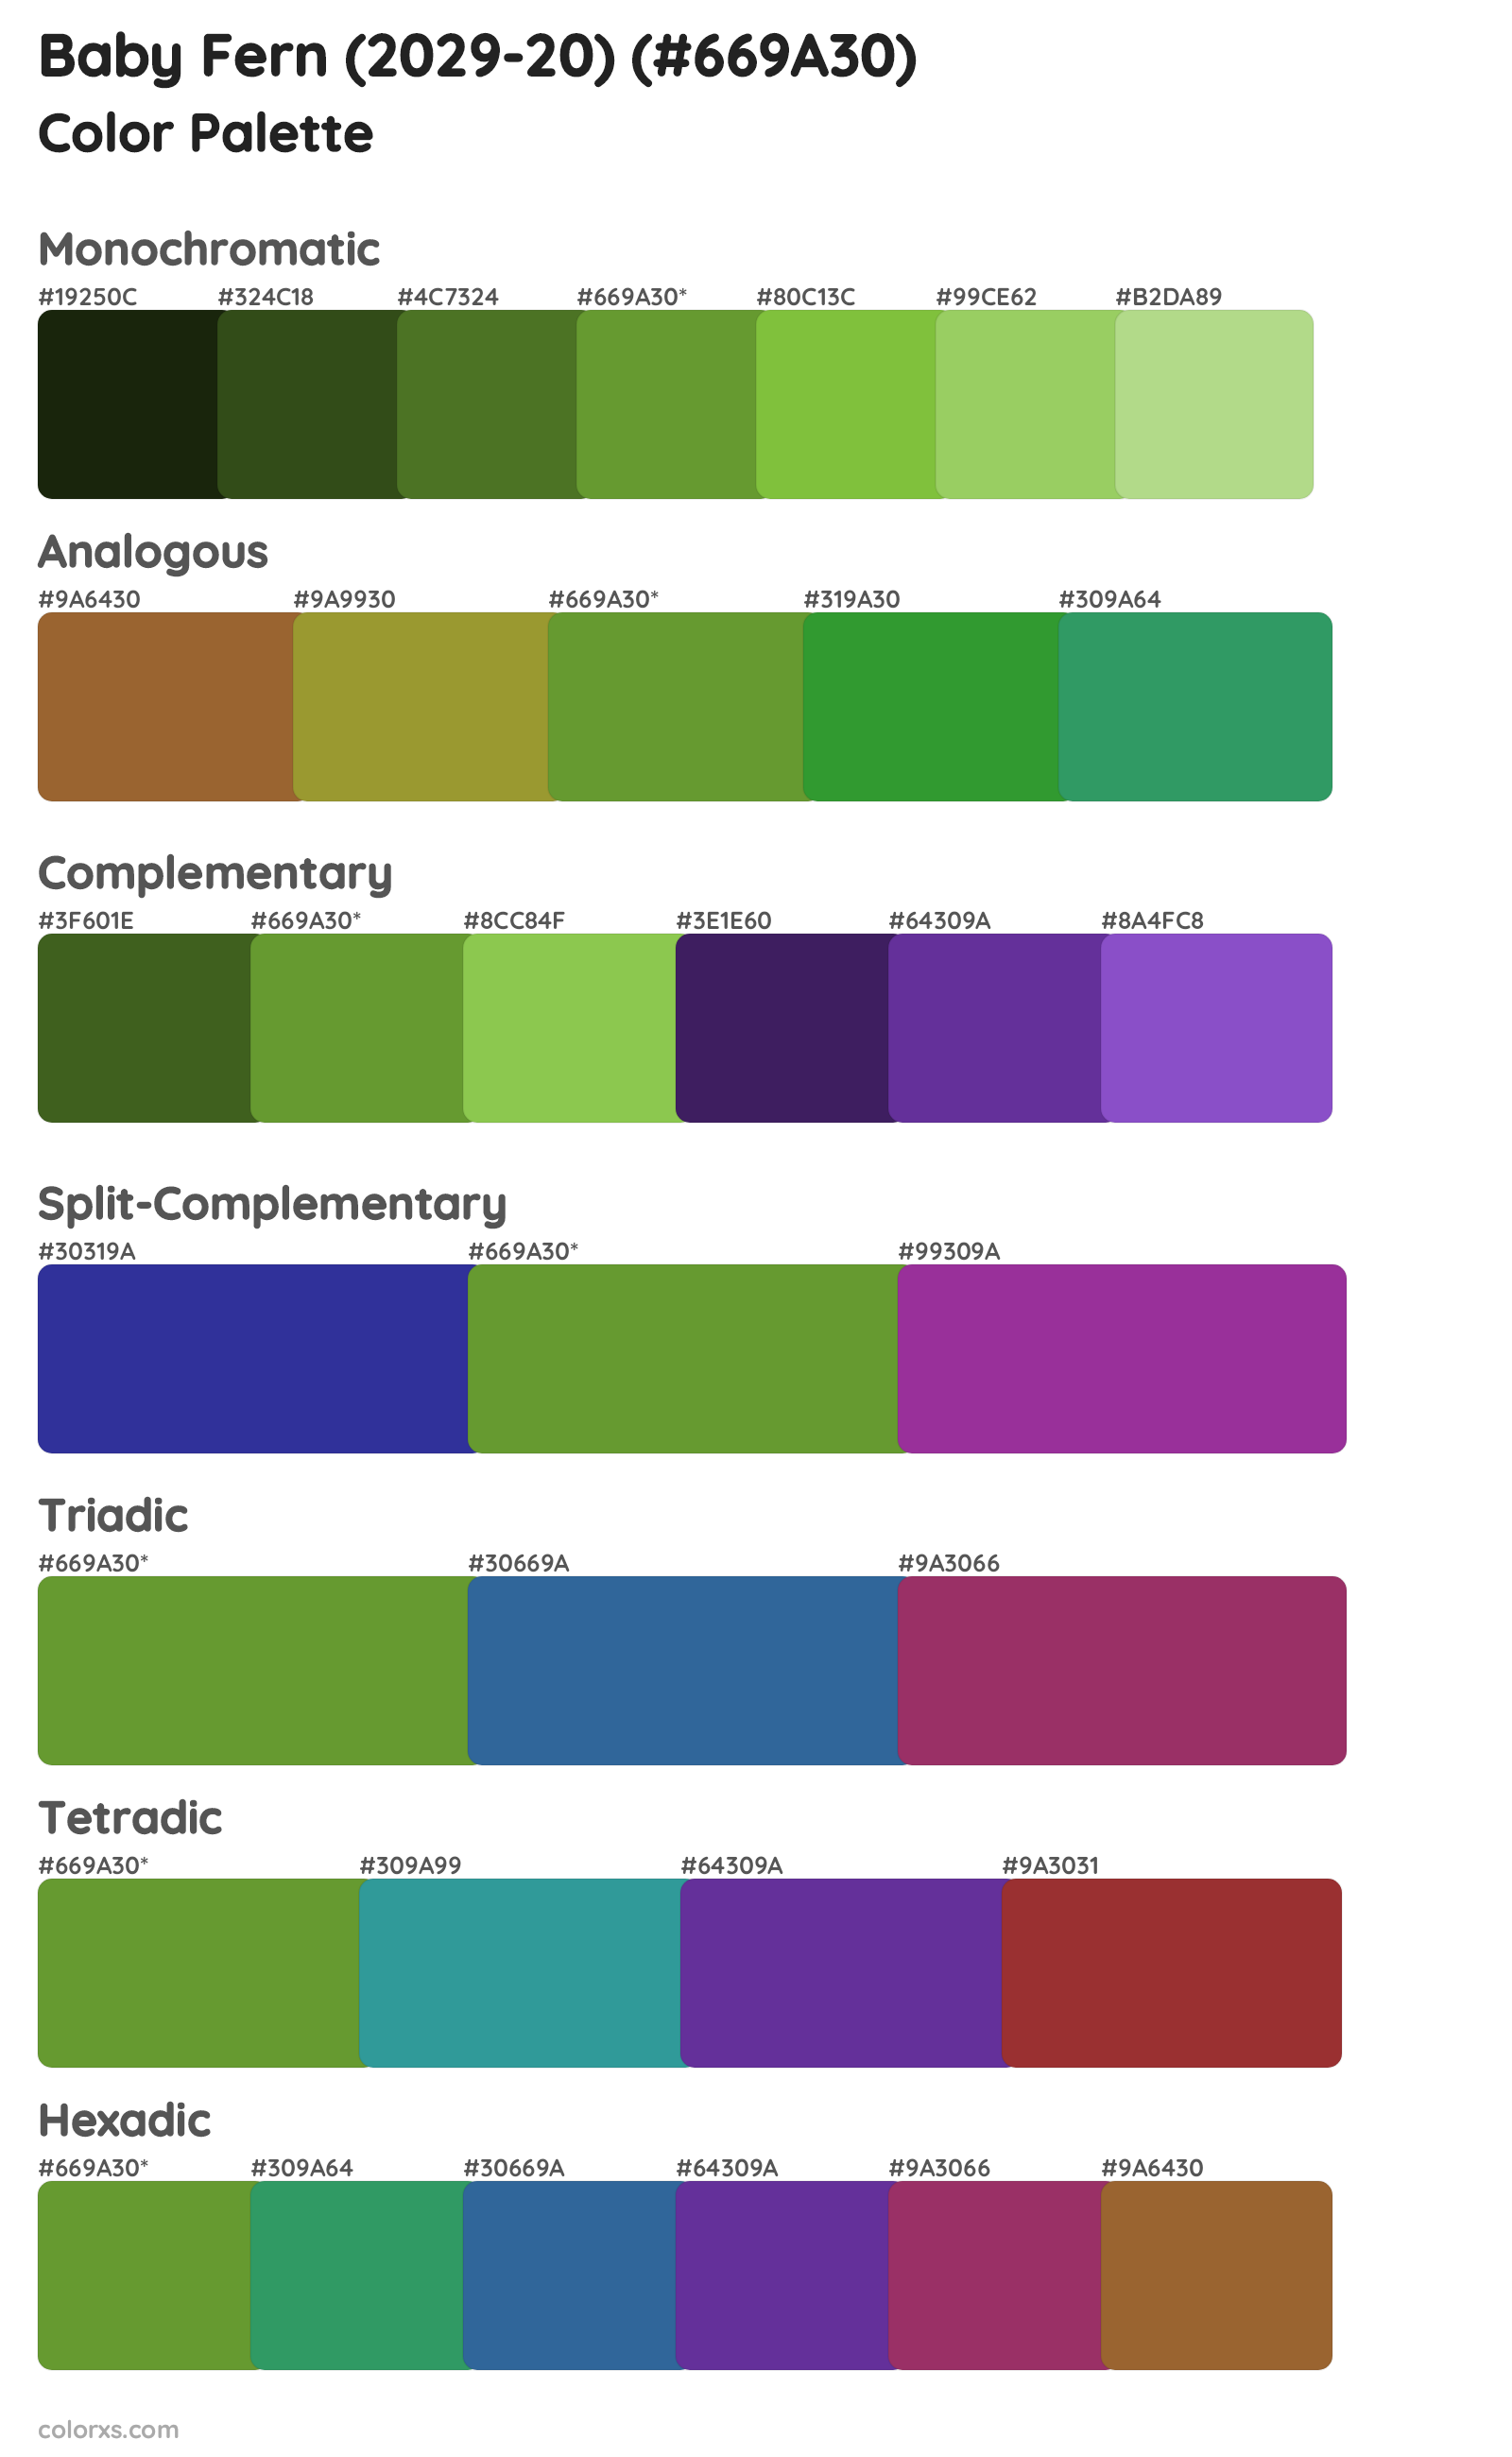 Baby Fern (2029-20) Color Scheme Palettes